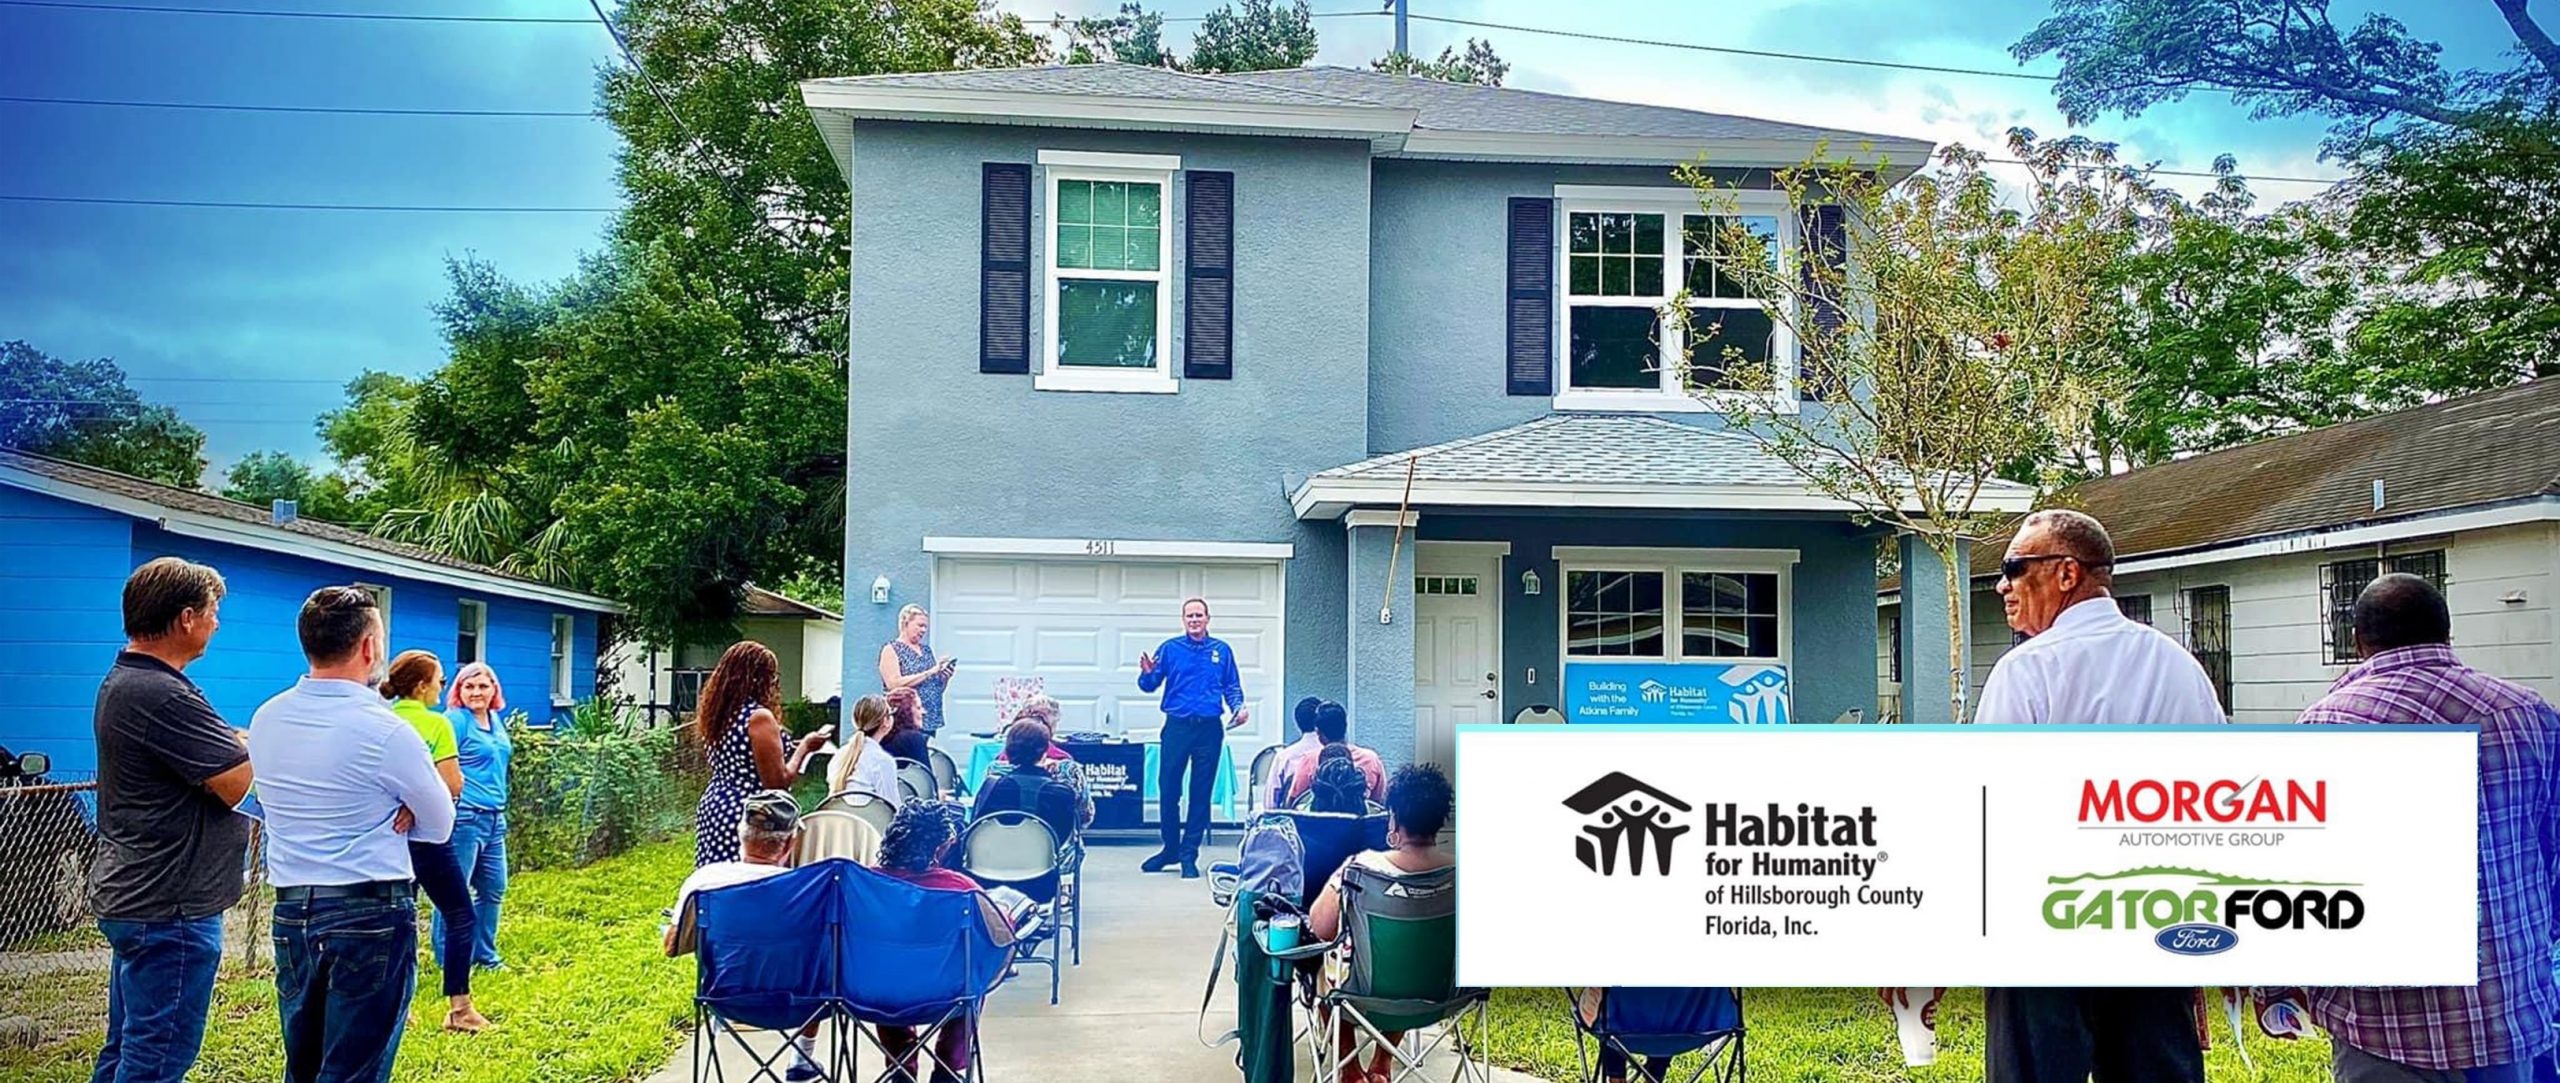 Habitat for Humanity Hillsborough County